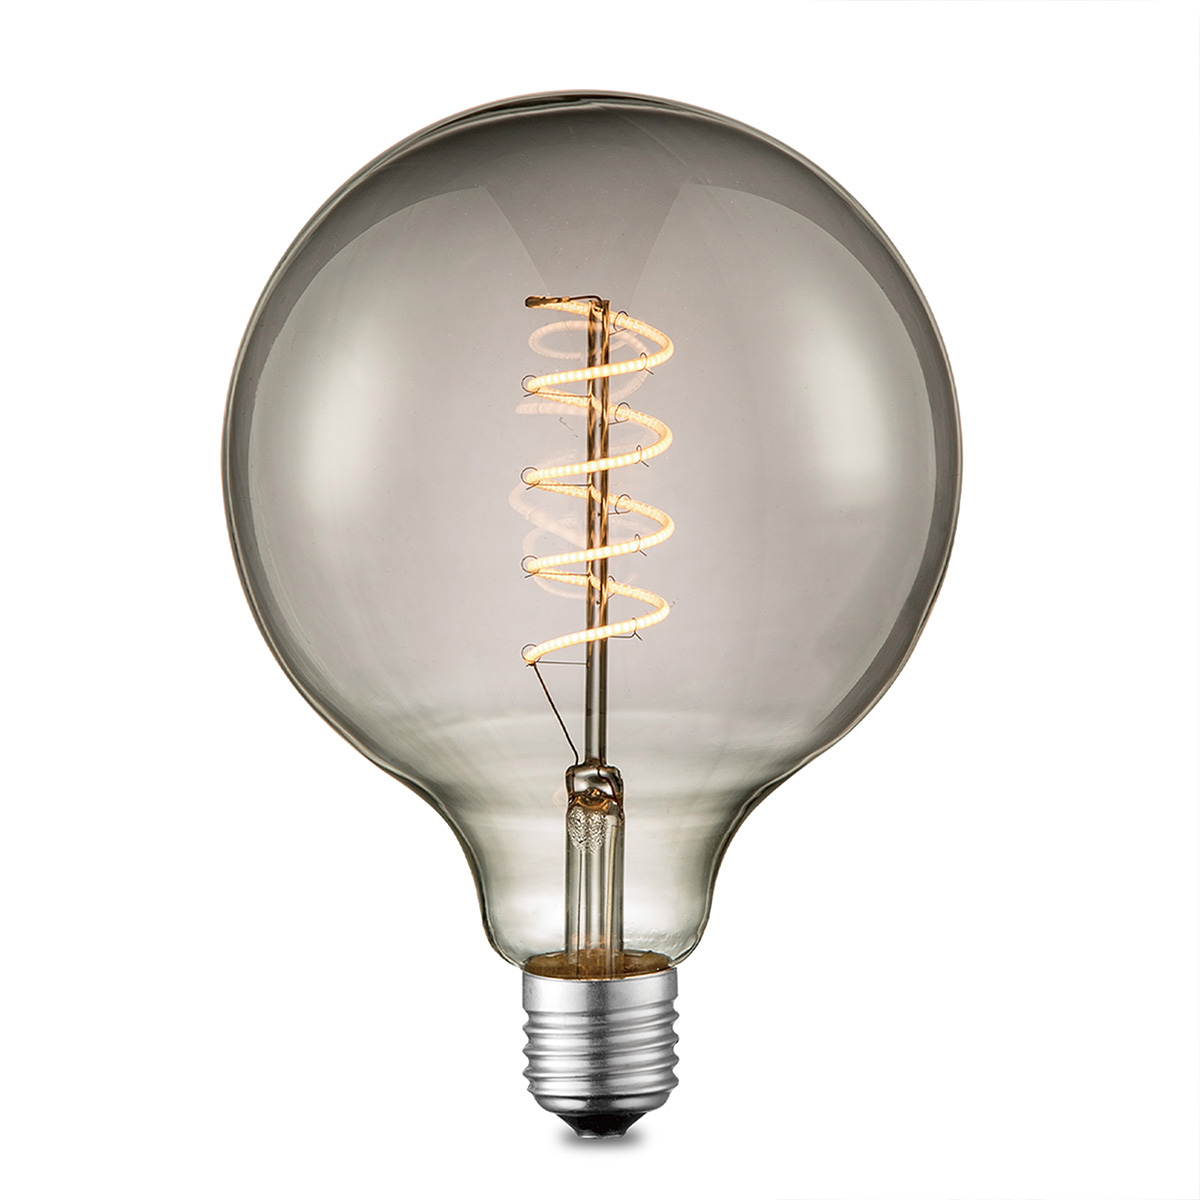 Tangla lighting - TLB-8009-04SM - LED Light Bulb Single Spiral filament - G125 4W smoke - dimmable - E27